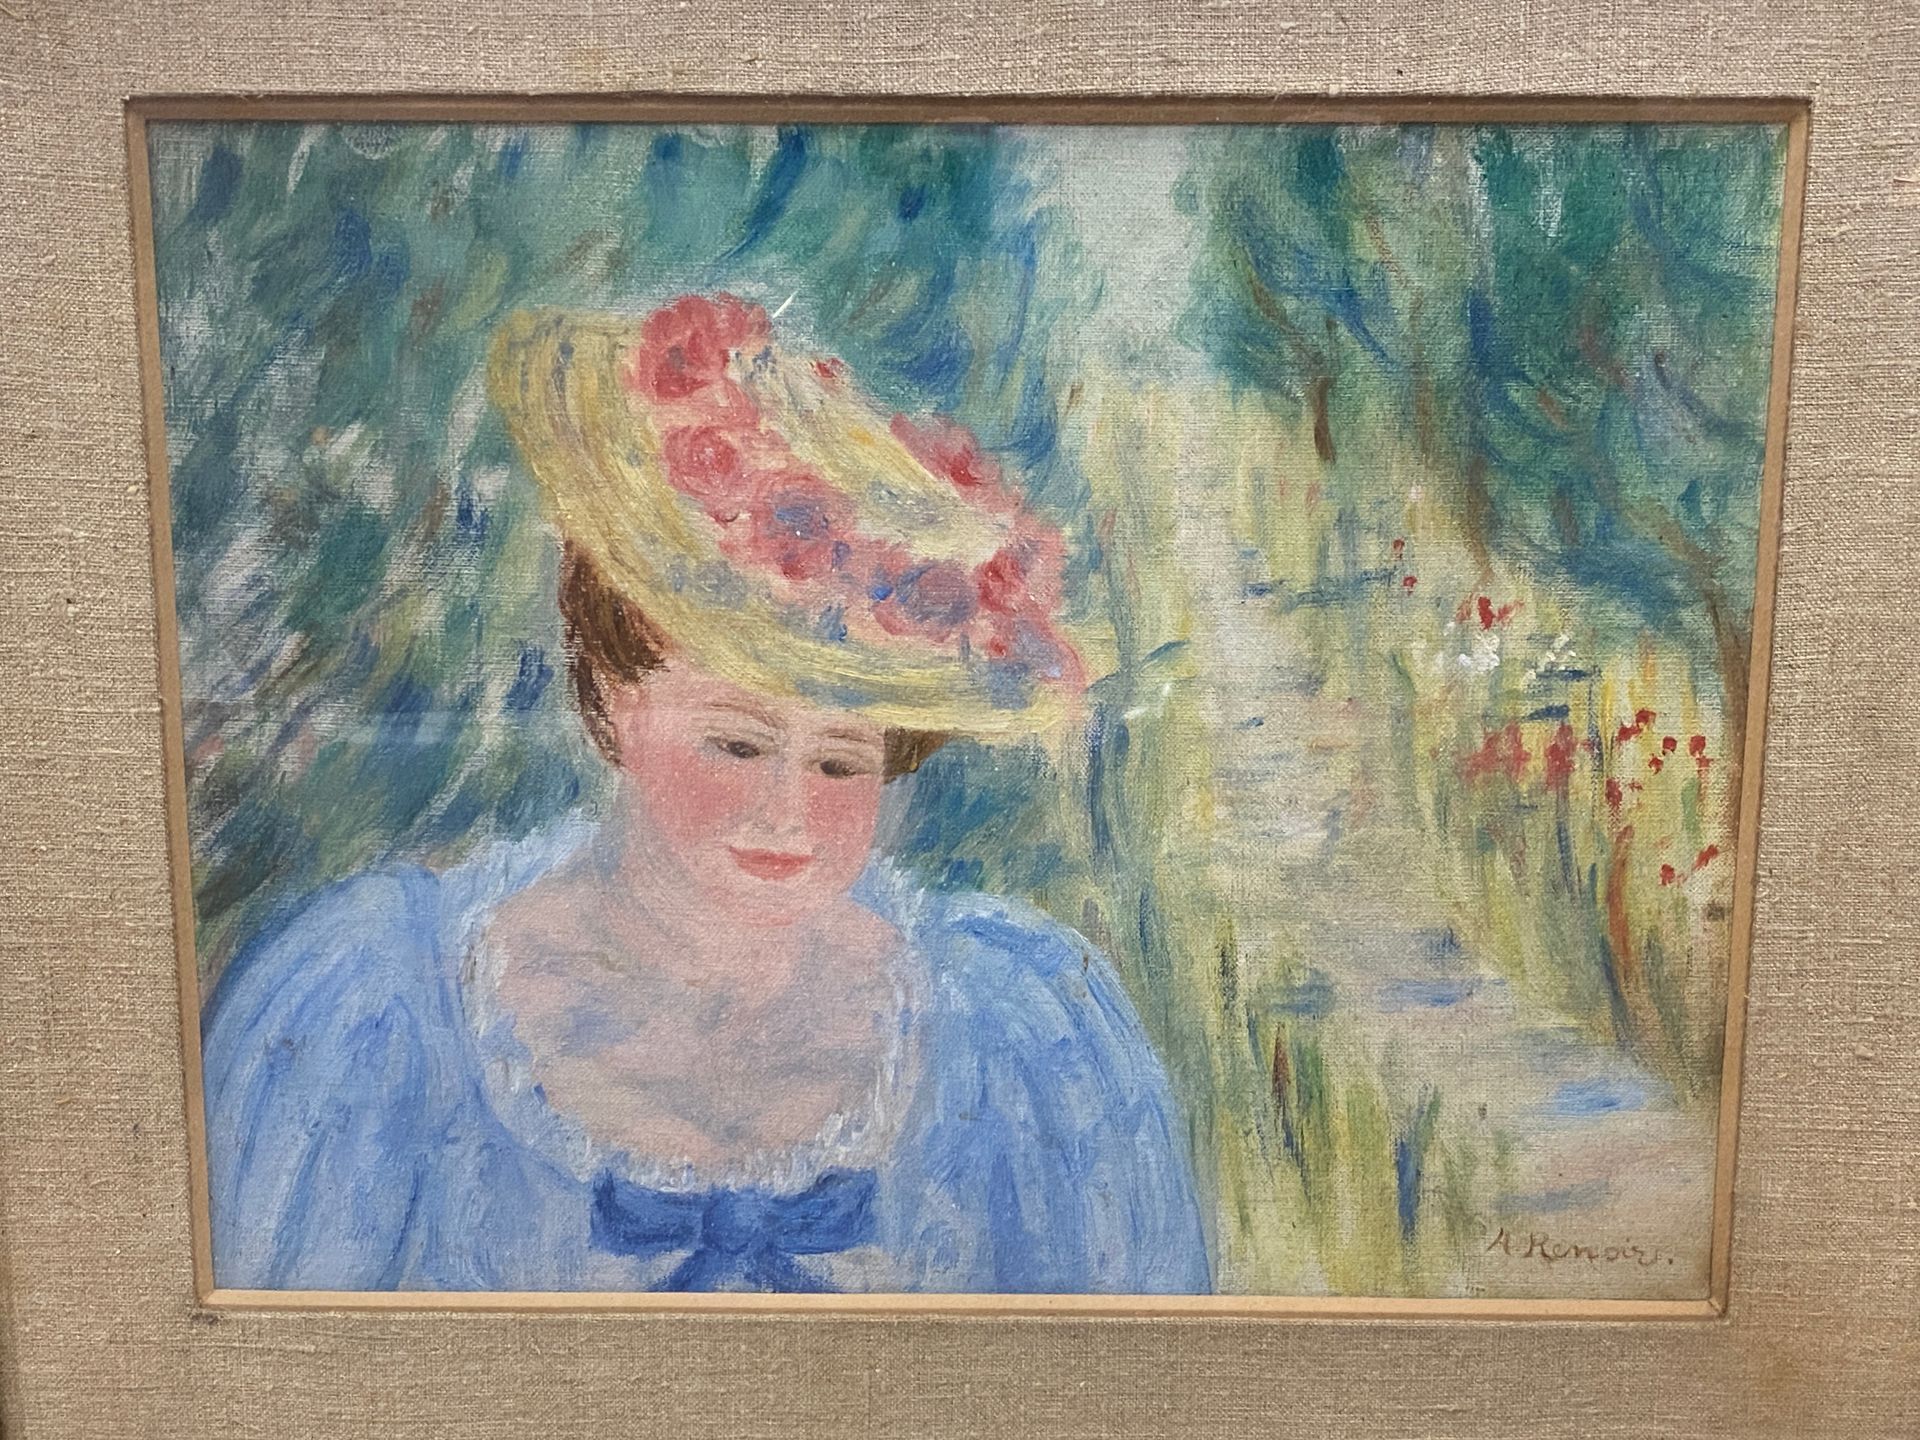 Null 戴帽子的女人肖像

布面油画，右下方署名A.RENOIR。

尺寸：27x34厘米（视线）。